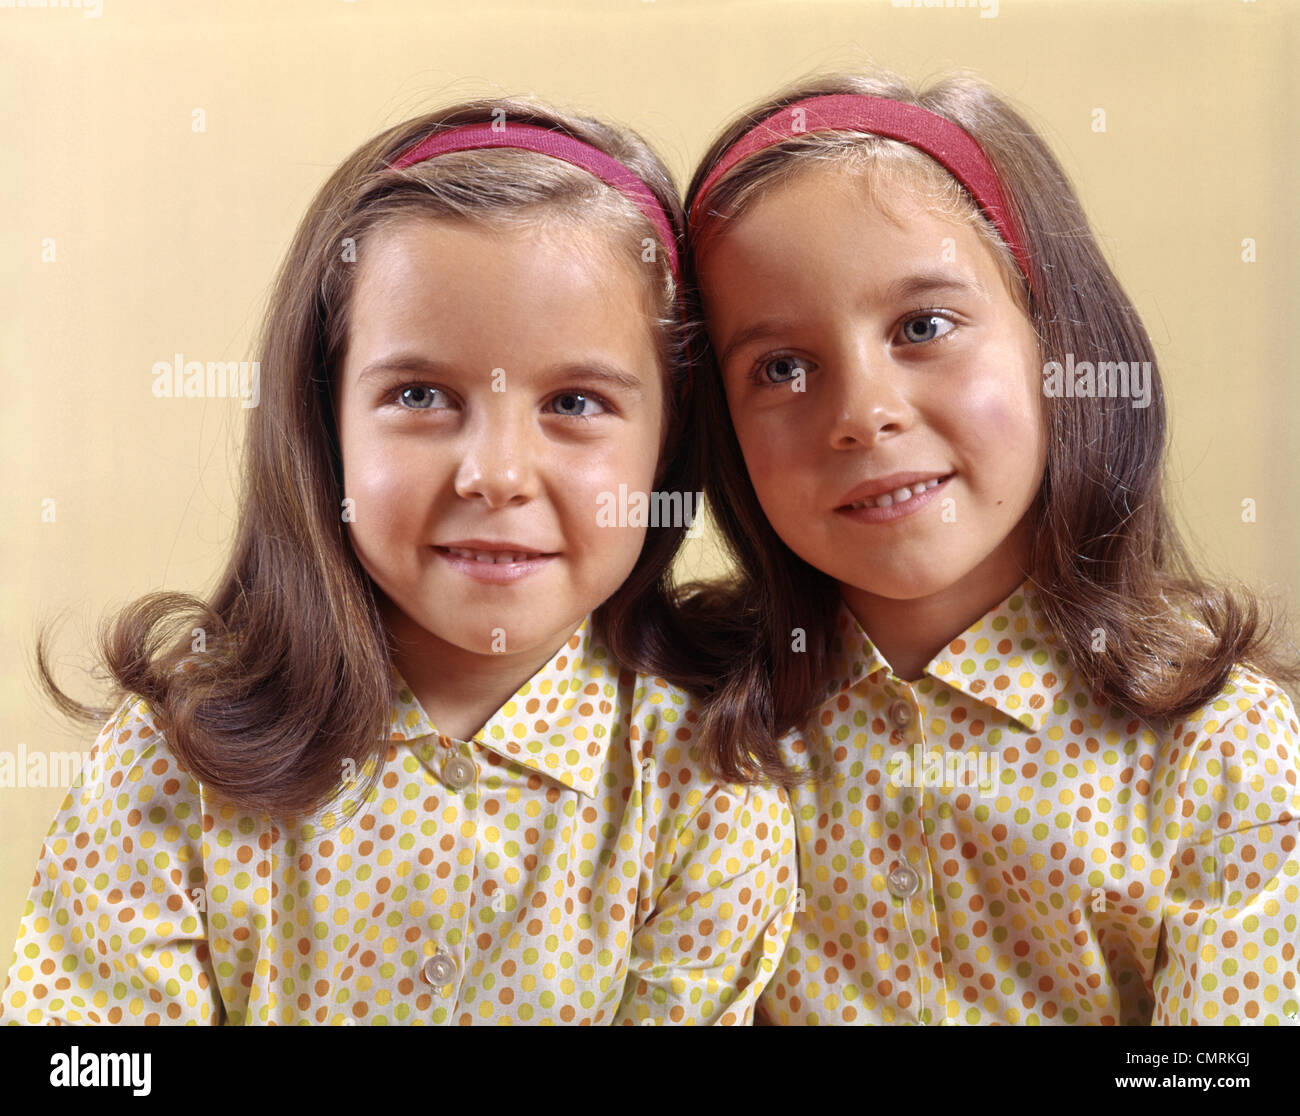 1970 1970s TWINS SISTERS SMILE POLKA DOT Stock Photo